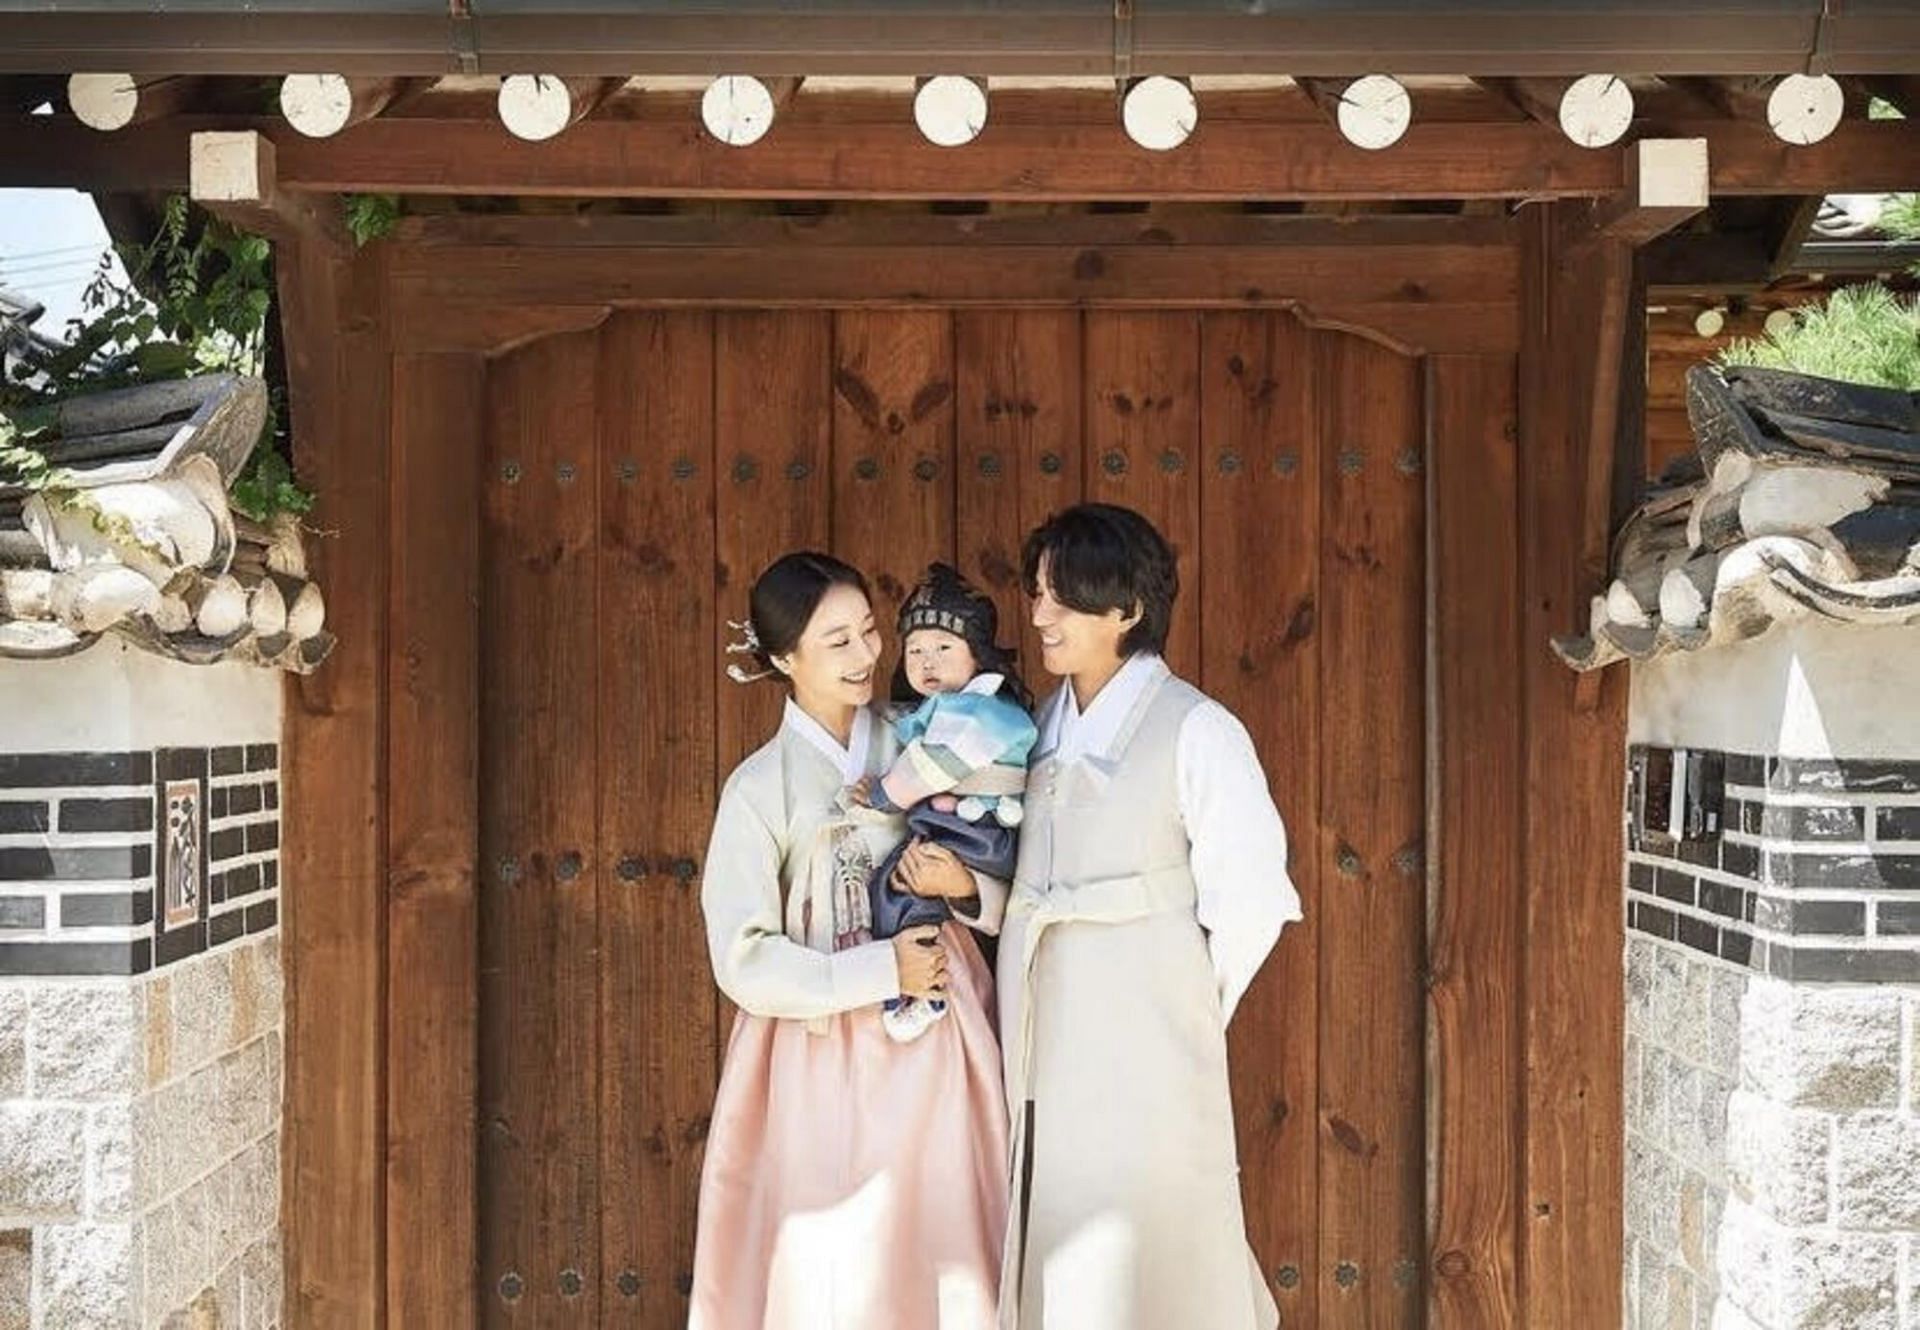 Gummi posing with her family (Image via Instagram/@g.mi)